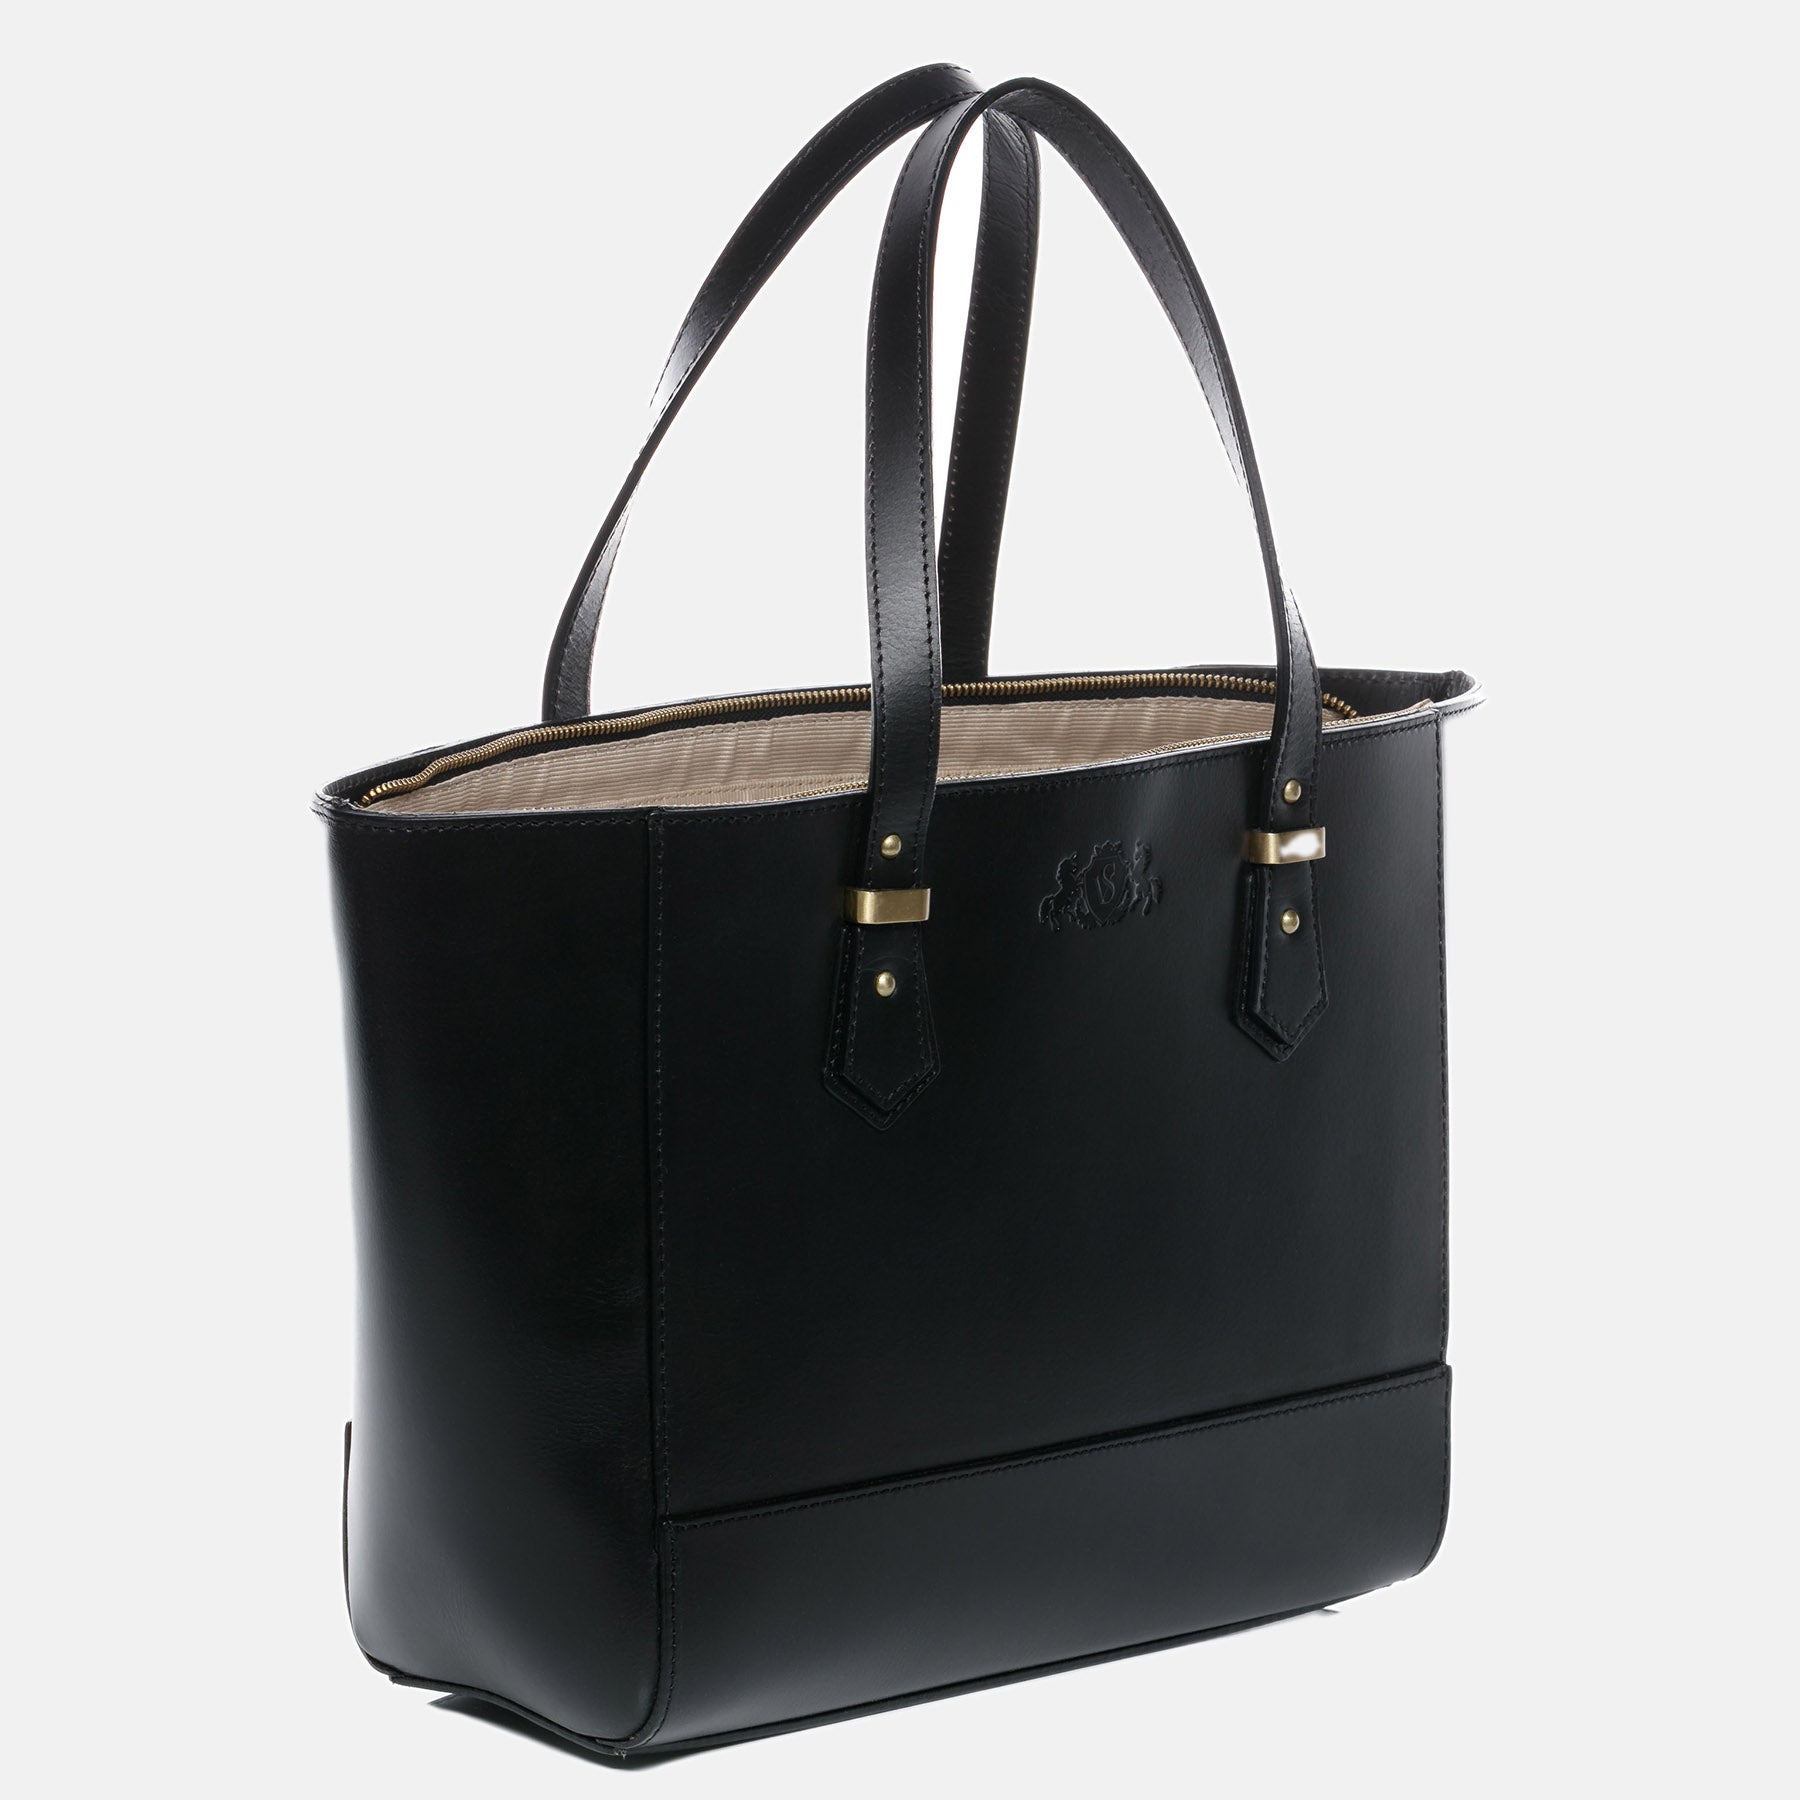 Handbag TRISH saddle leather black